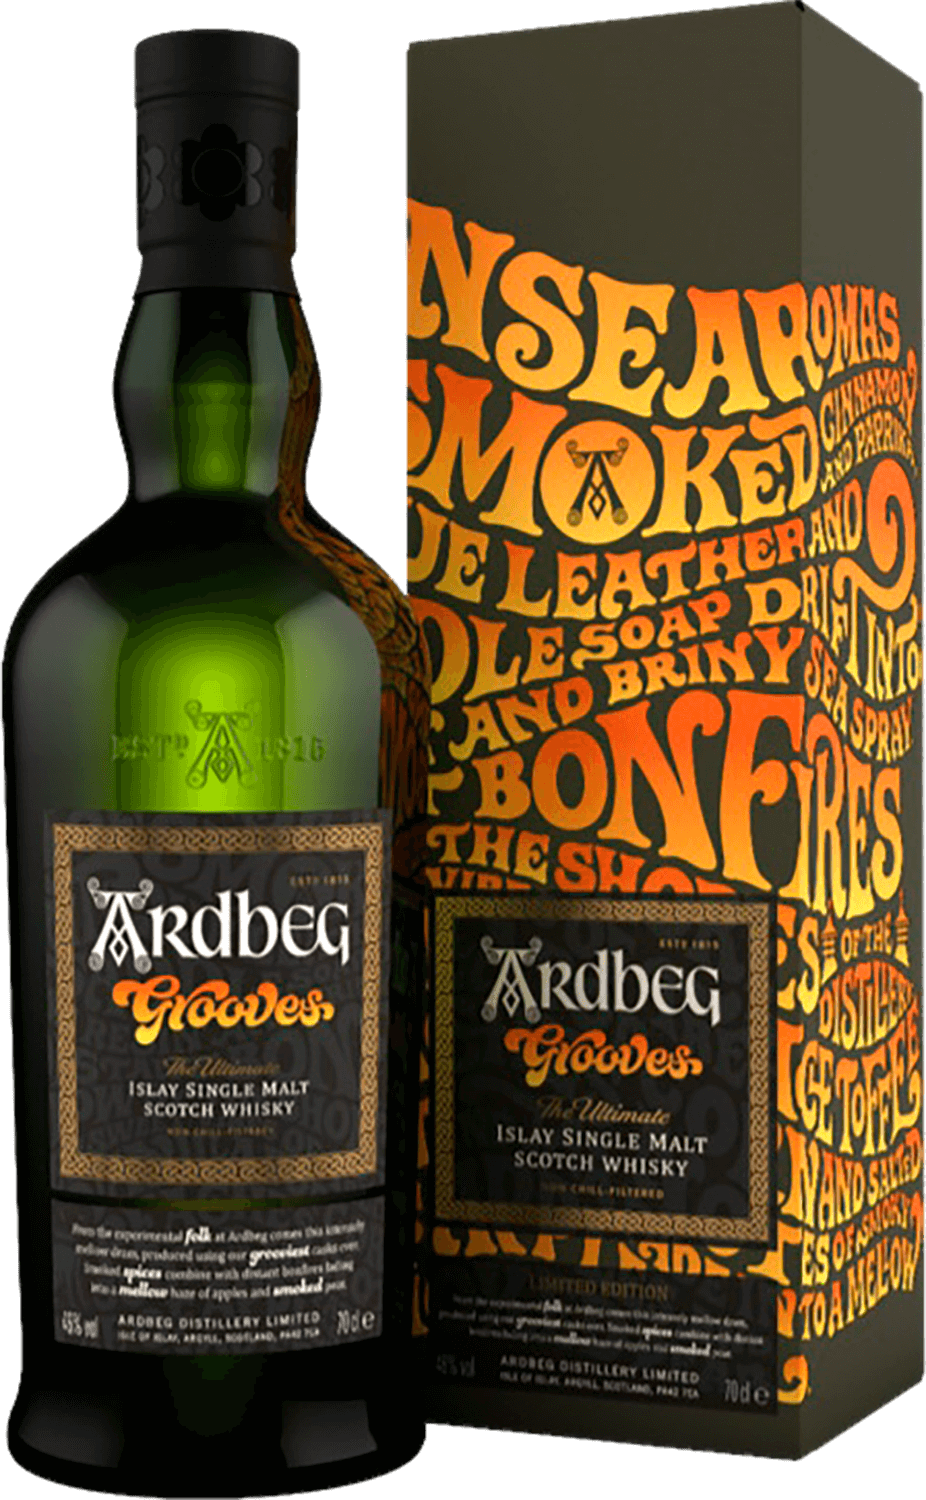 Ardbeg Grooves Islay Single Malt Scotch Whisky (gift box) bowmore 15 y o islay single malt scotch whisky gift box